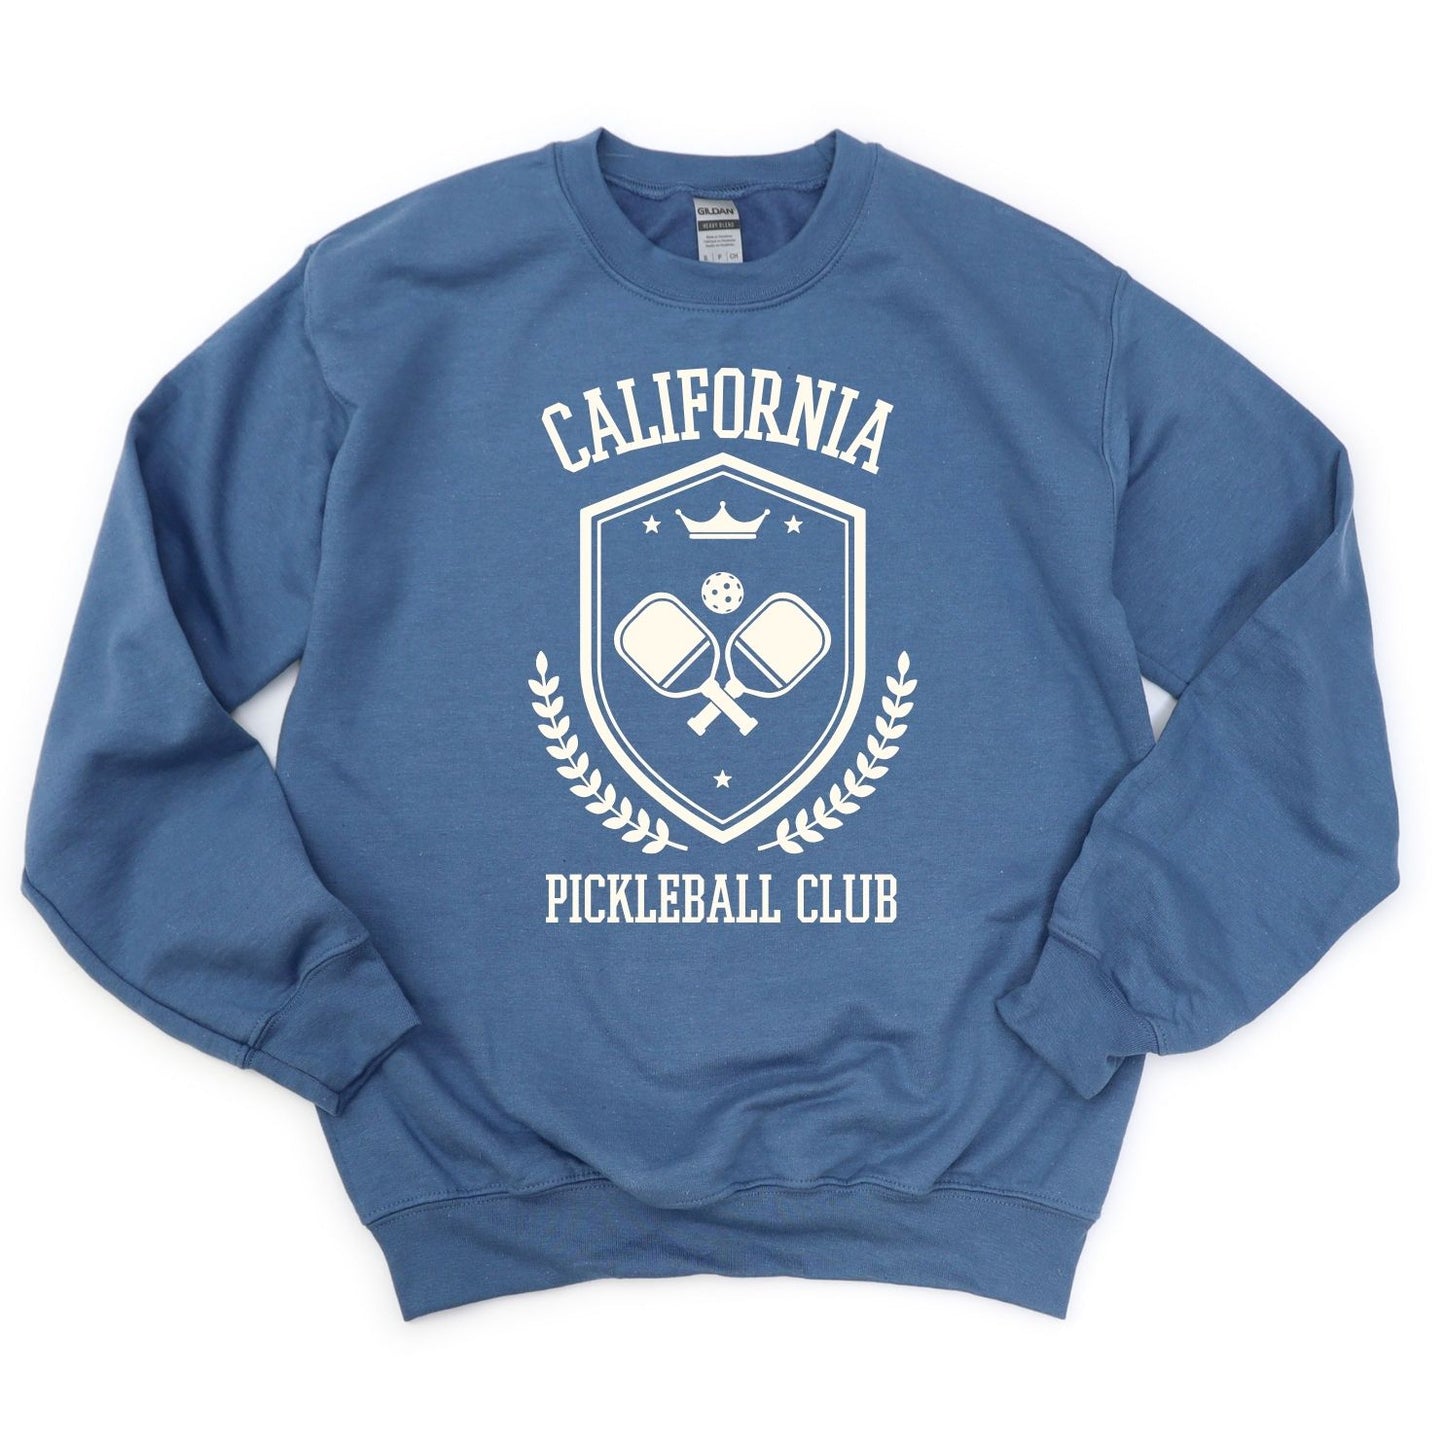 California Pickleball Club Sweatshirt